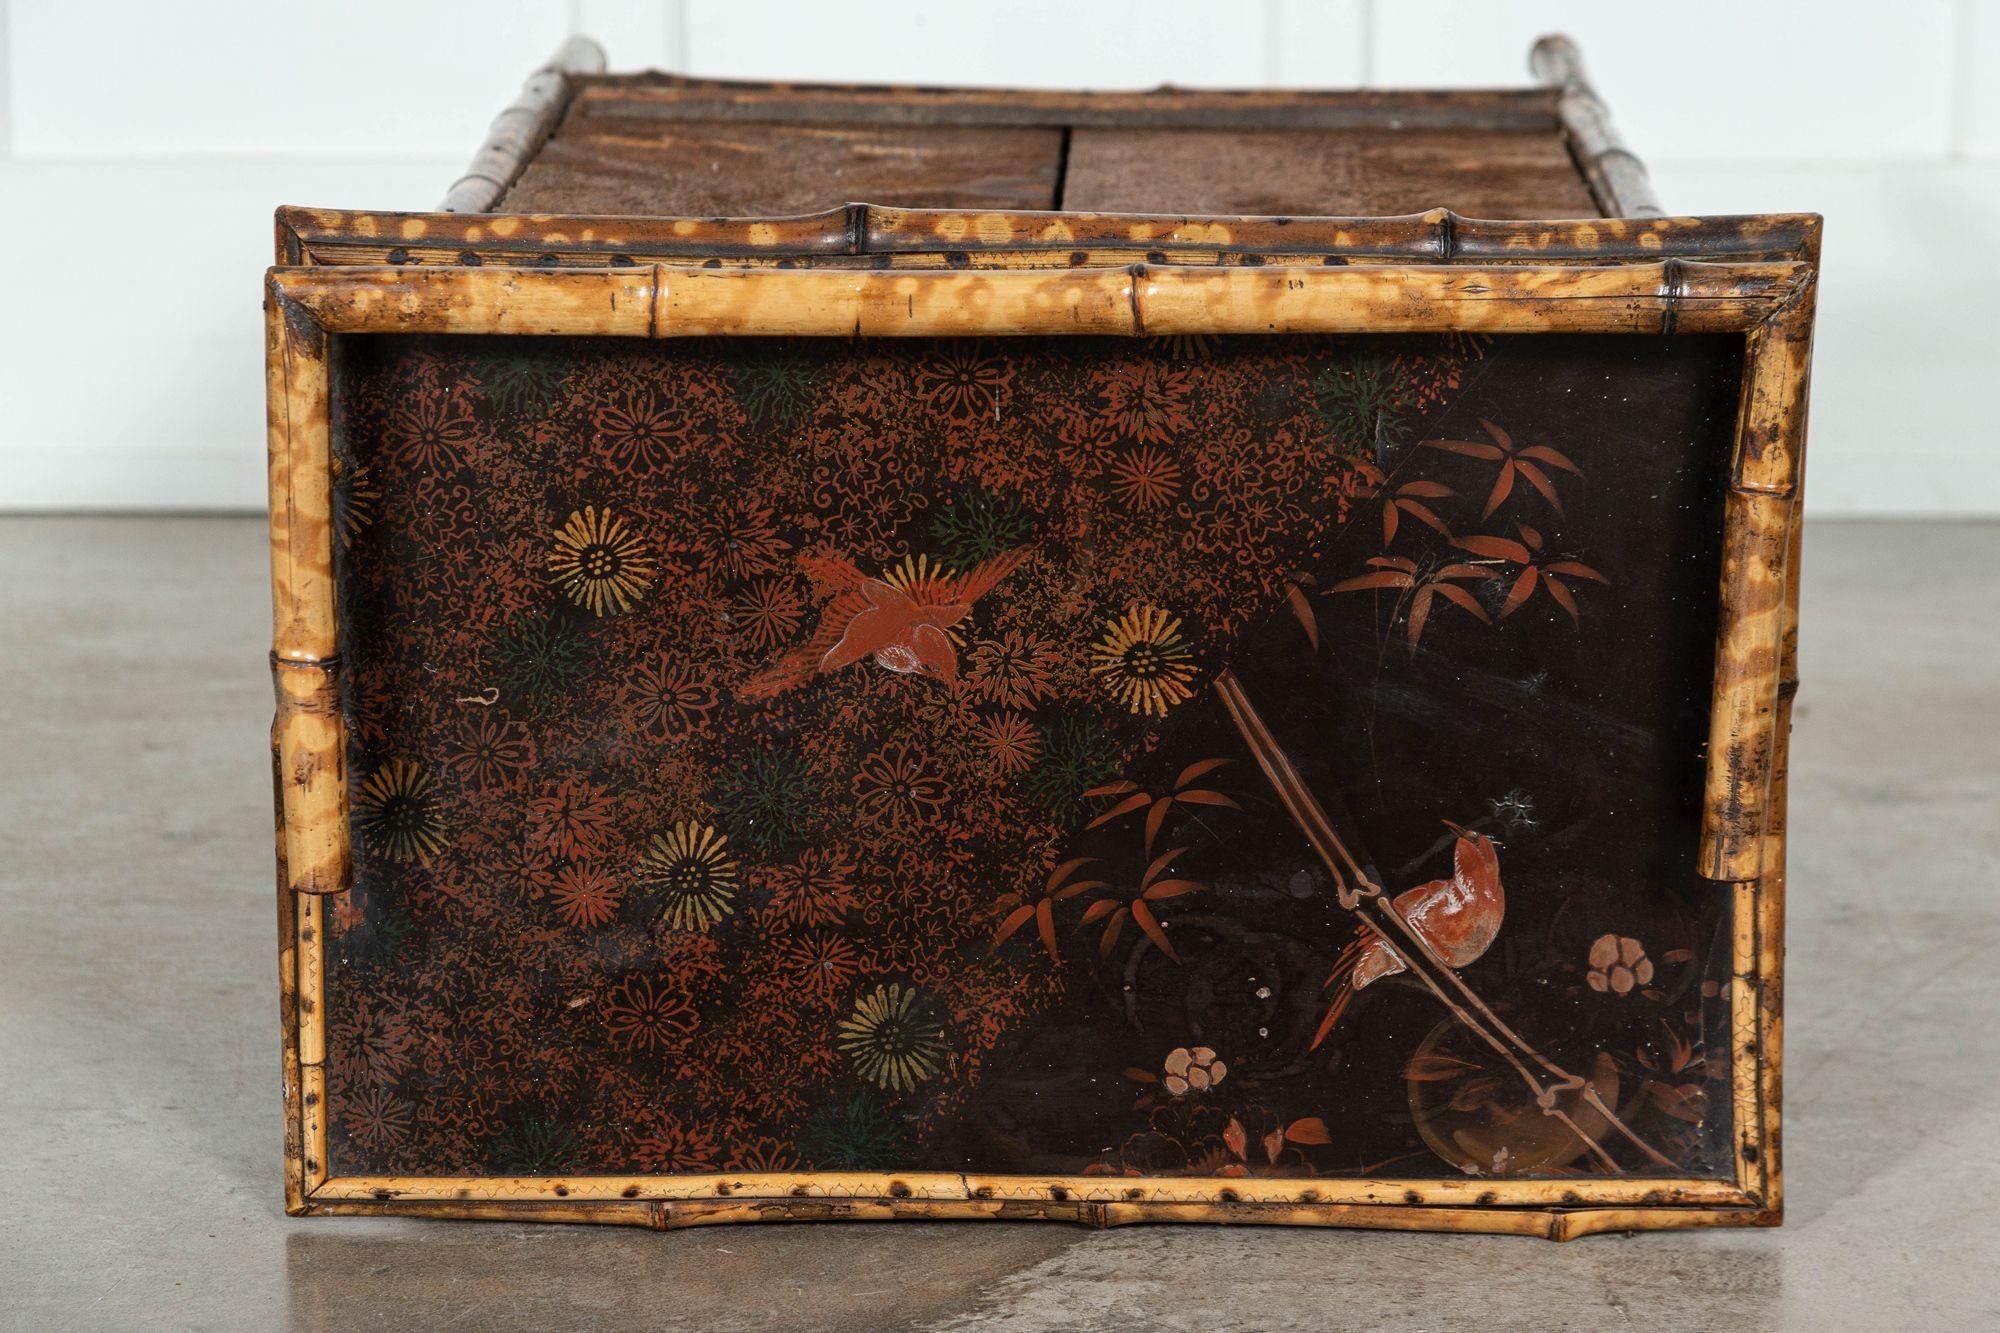 Circa 1880
19thC English Glazed Bamboo Bookcase Cabinet
sku 1494
W60 x D38 x H98 cm.